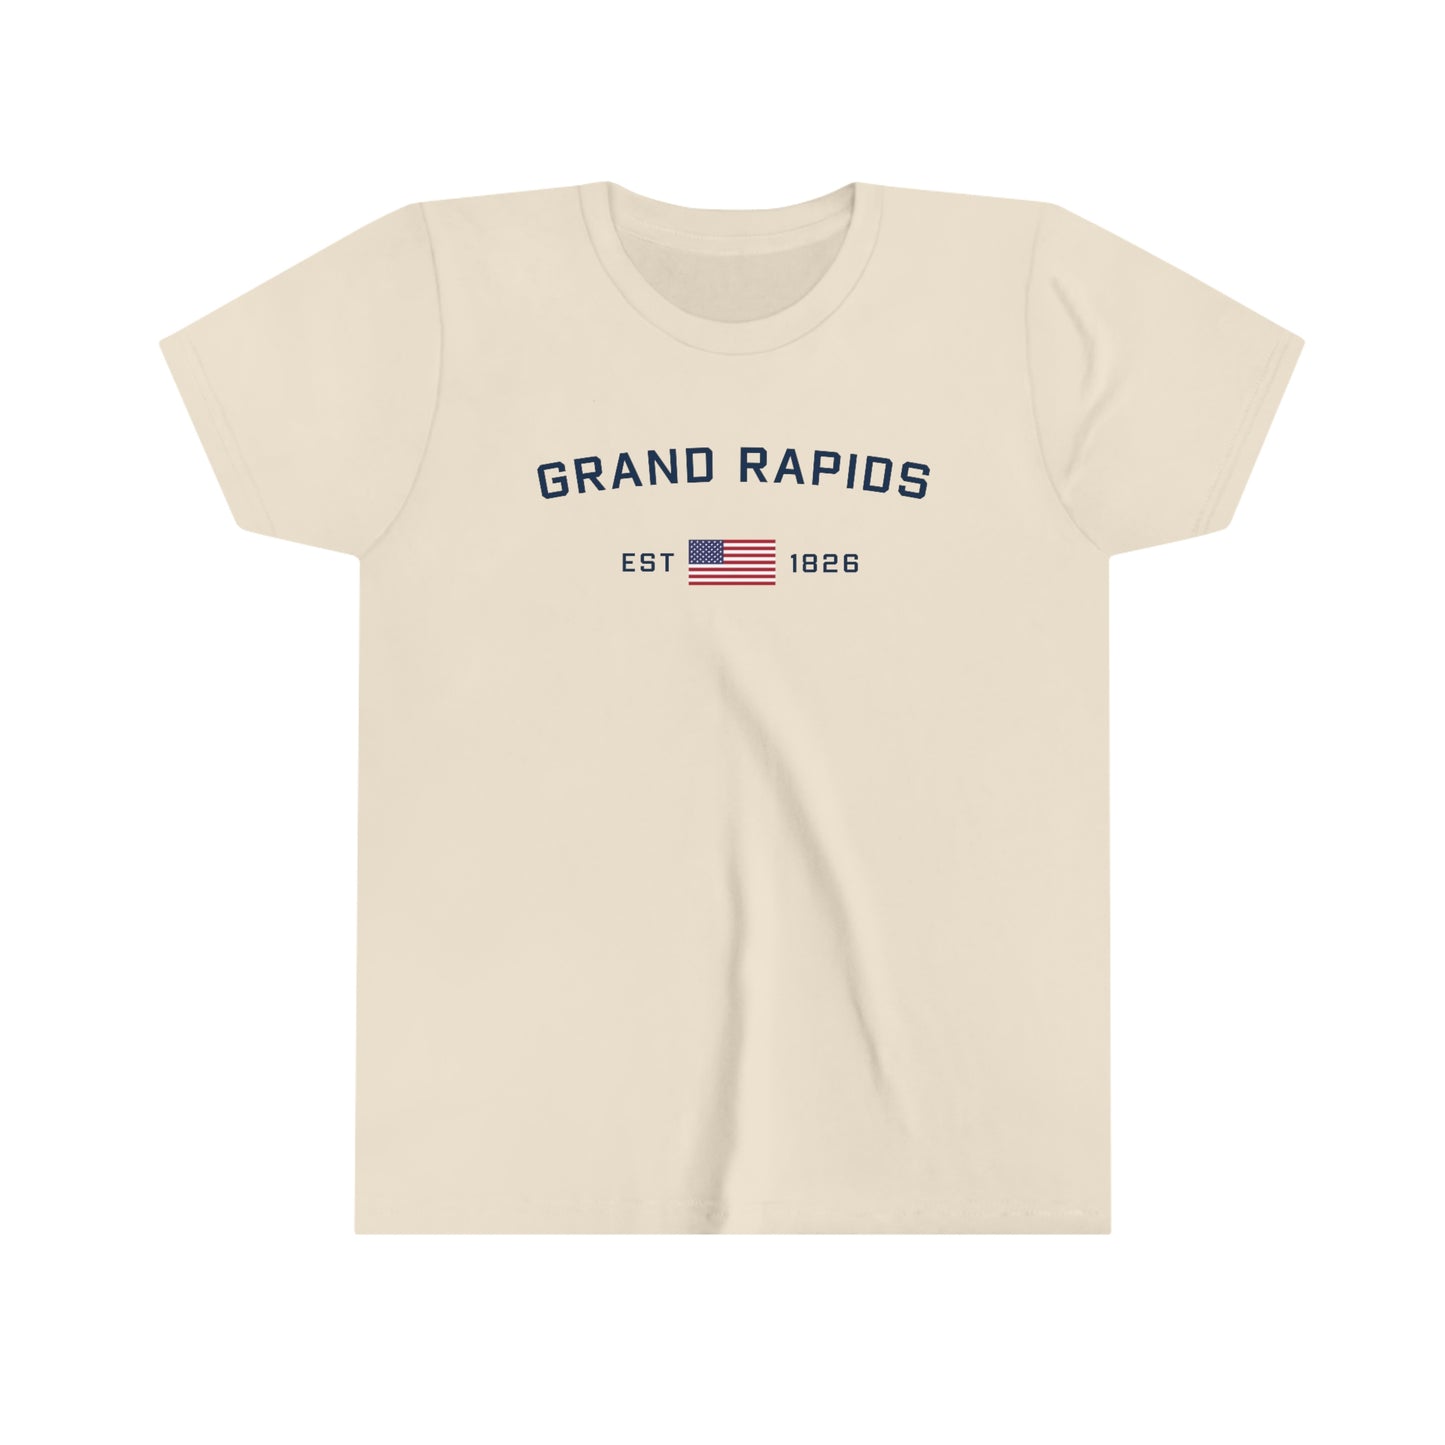 'Grand Rapids EST 1826' T-Shirt | Youth Short Sleeve